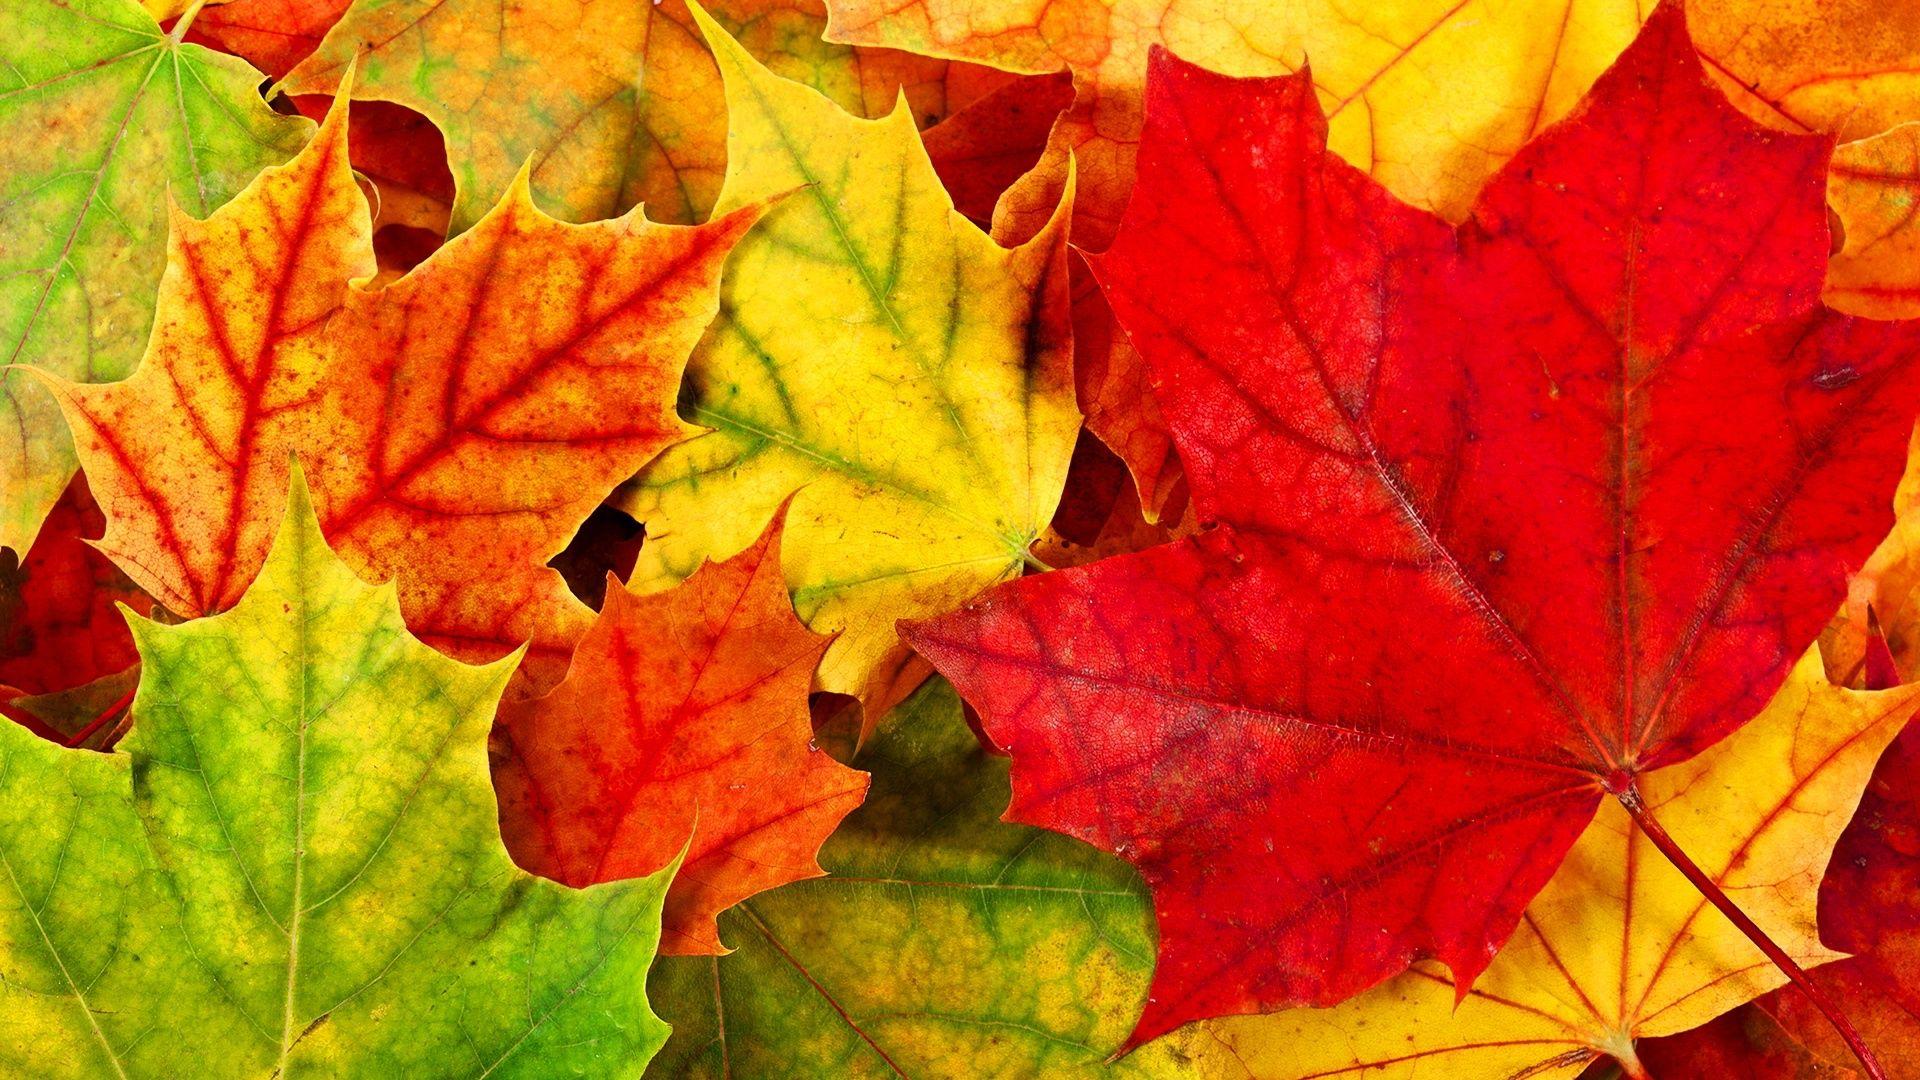 Falling Autumn Leaves Hd Wallpaper : Wallpapers13.com